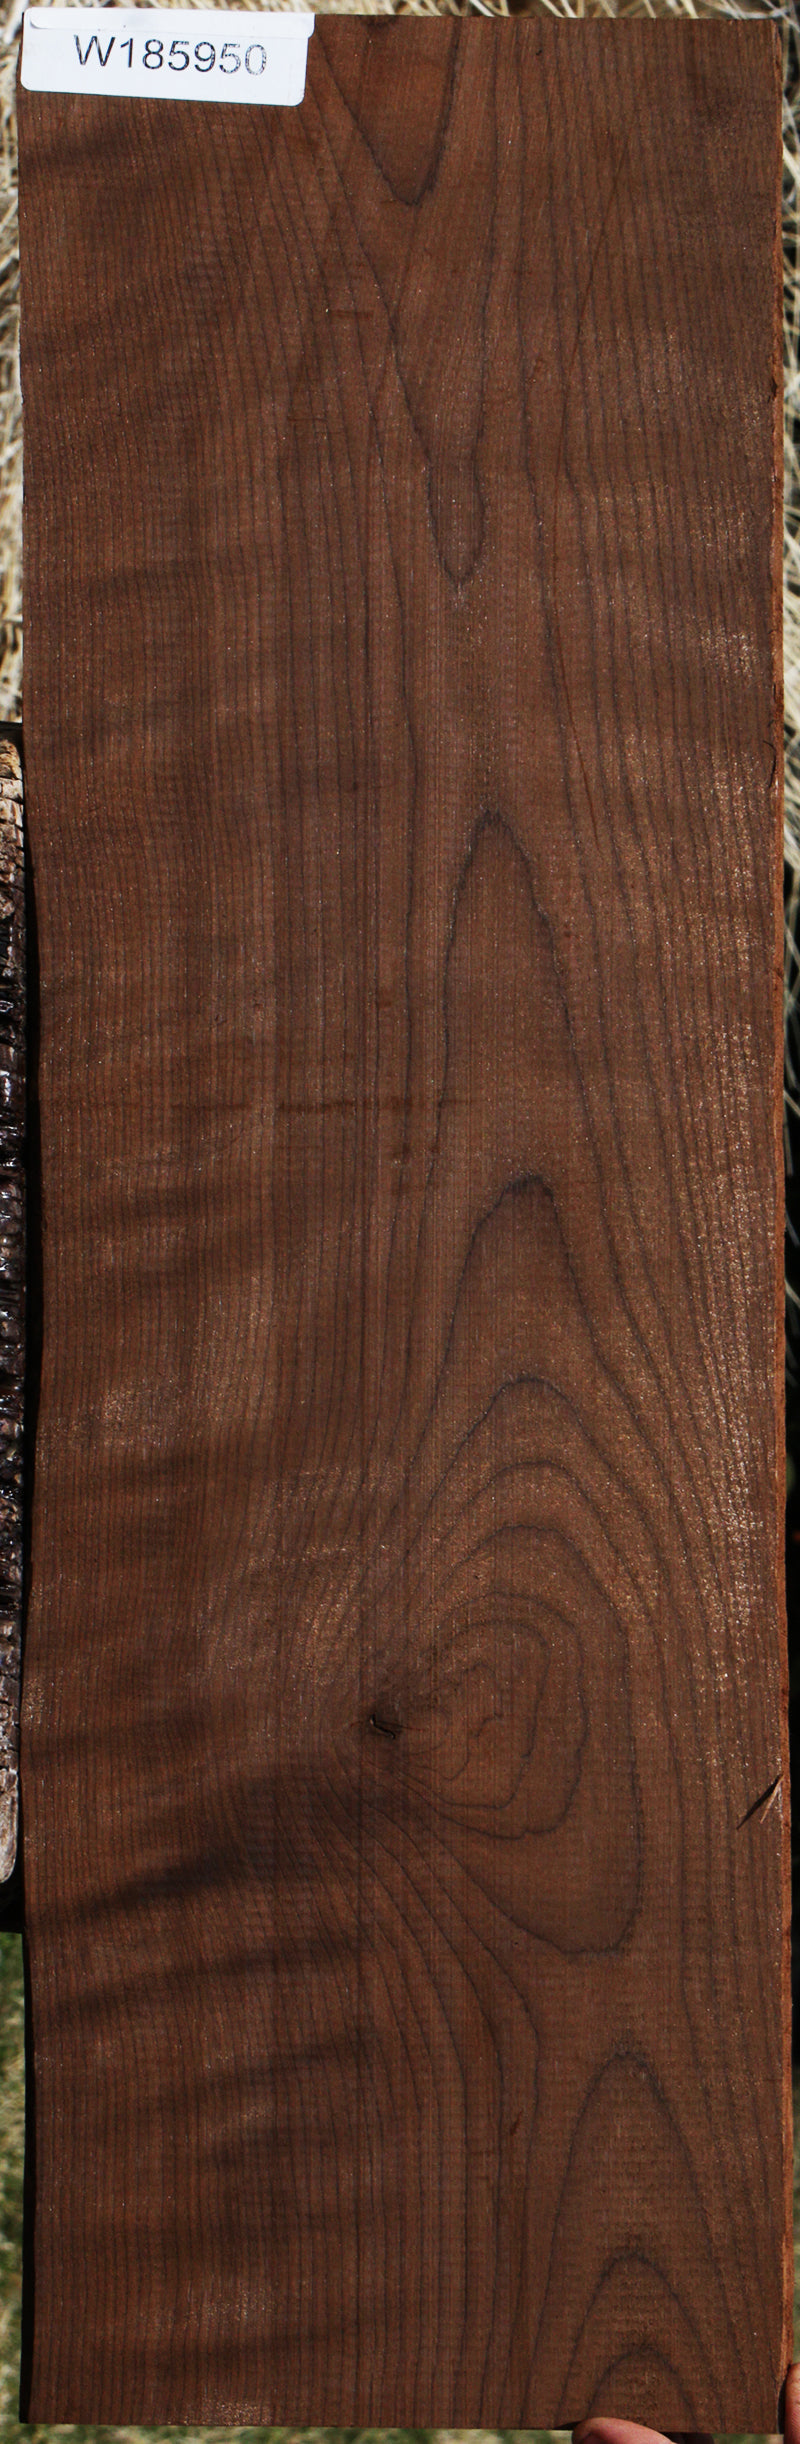 Figured Caramelized Birch Lumber